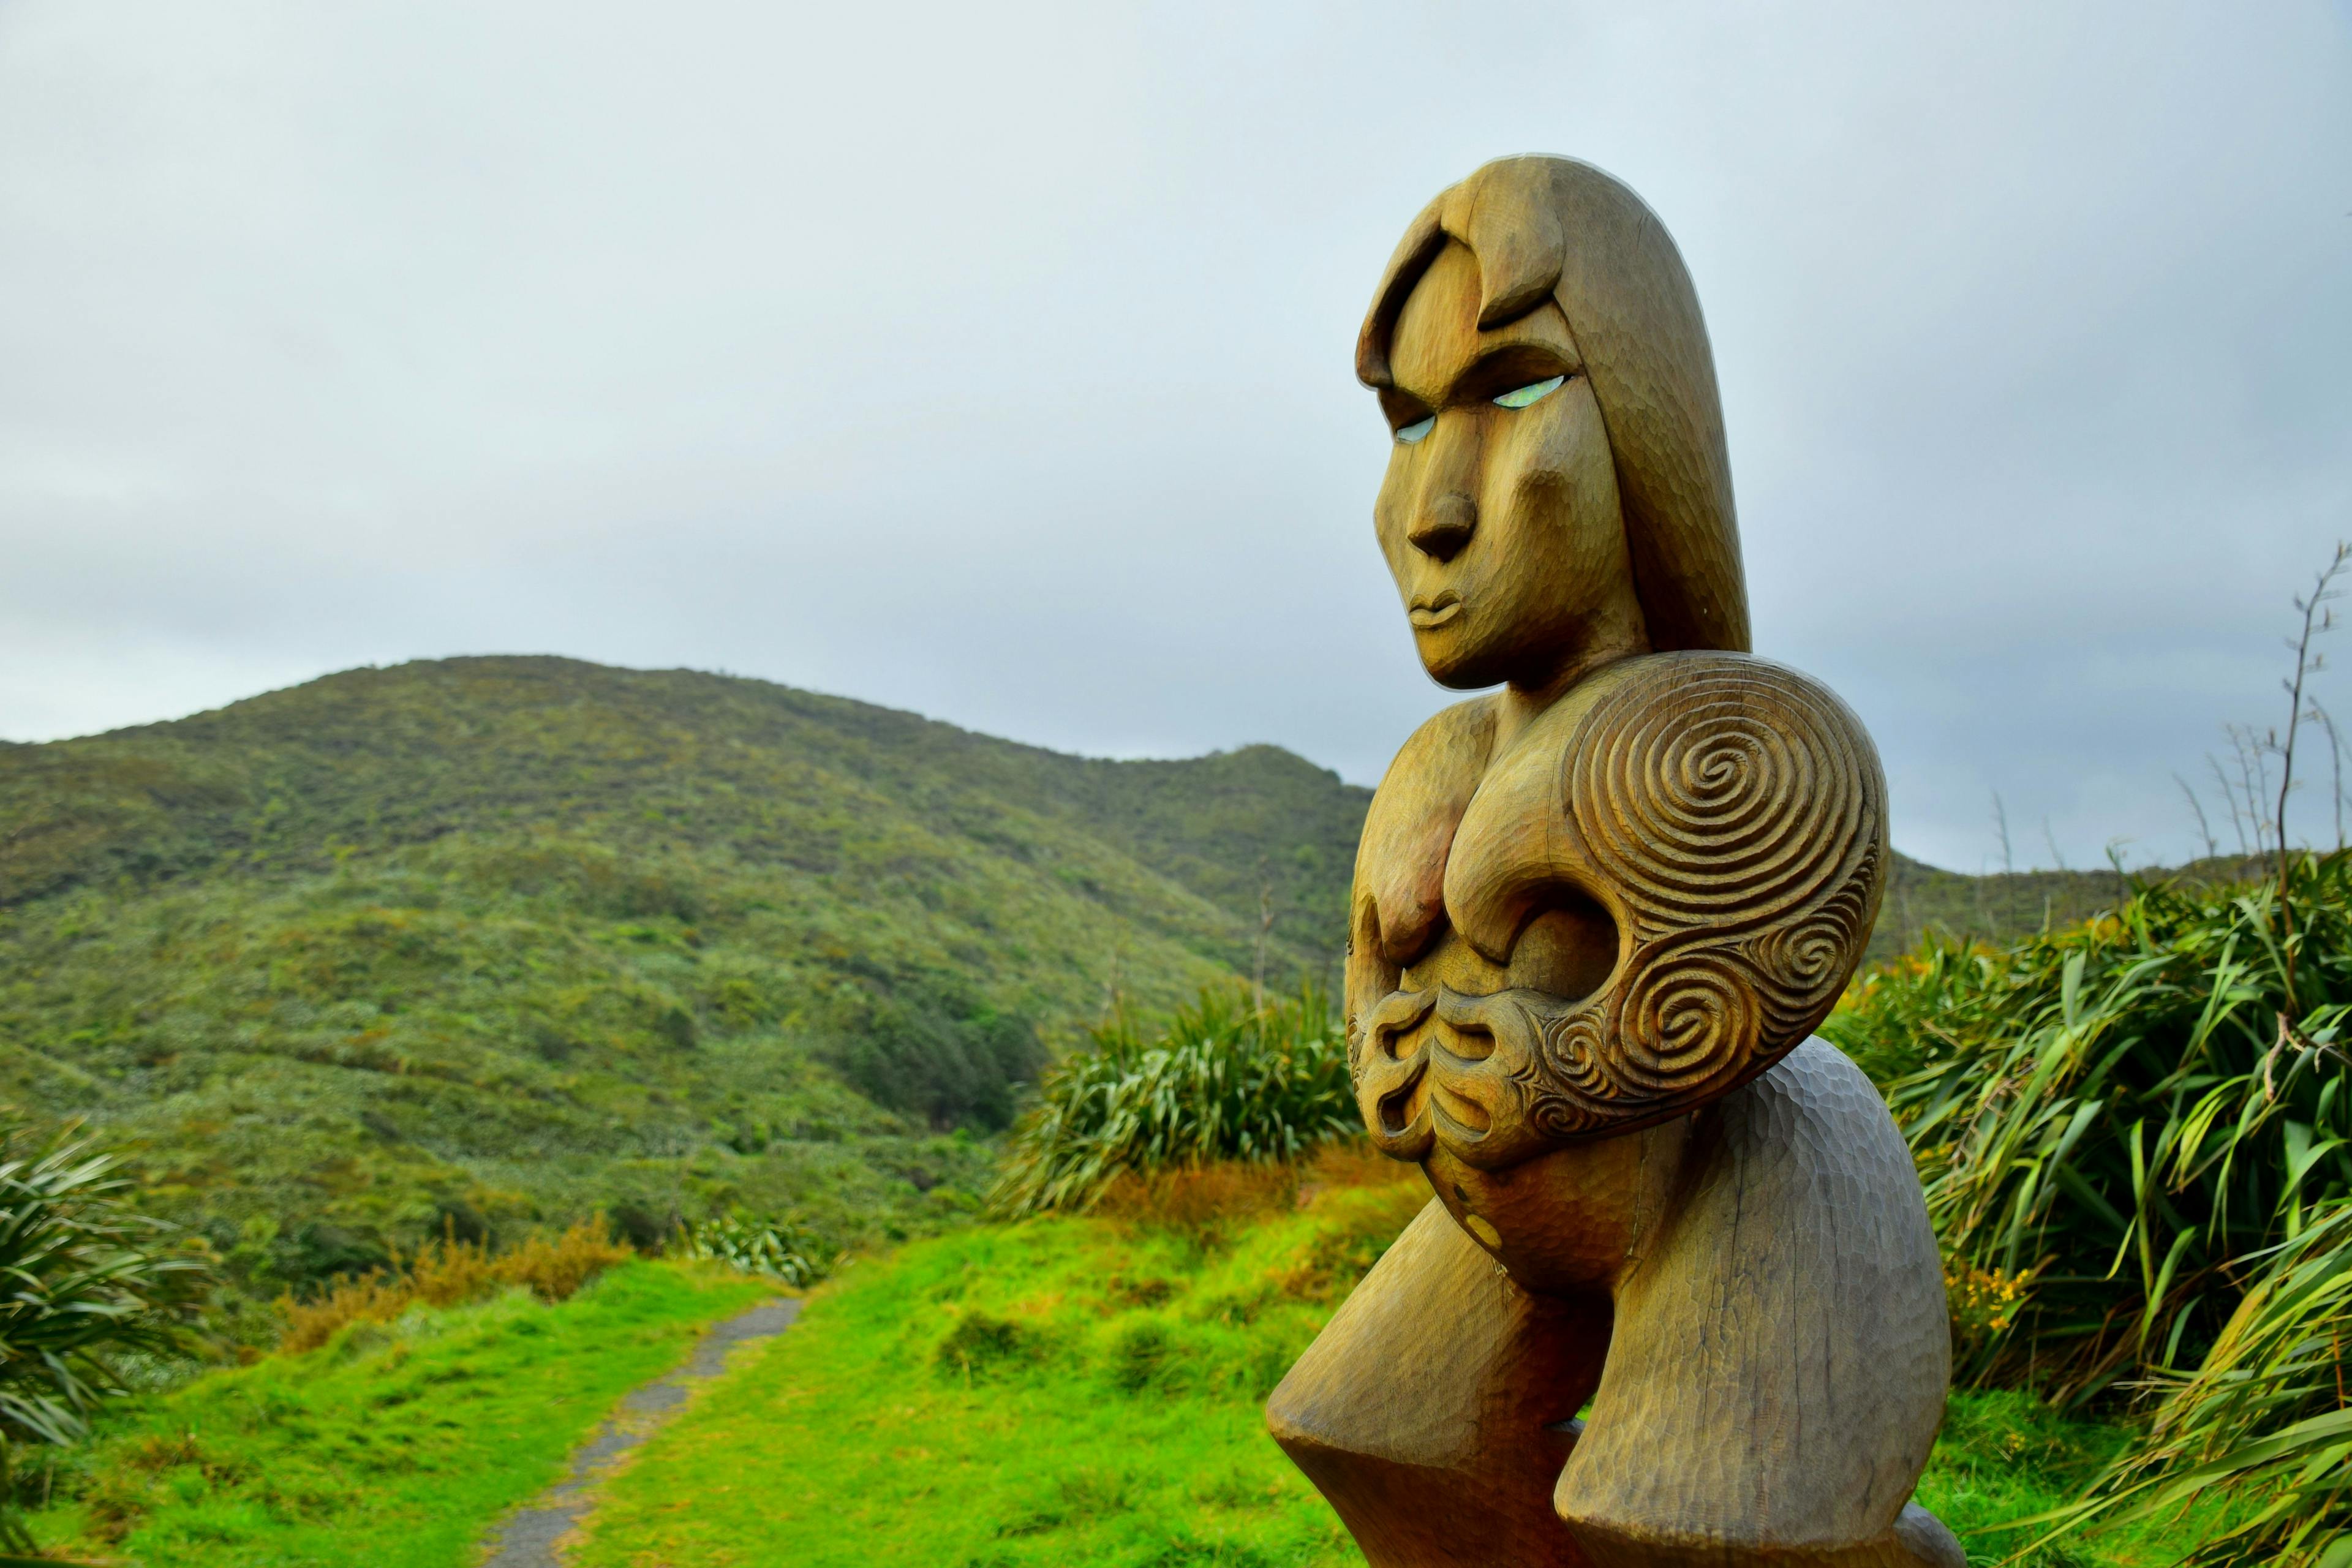 Maori statue in New Zealand.